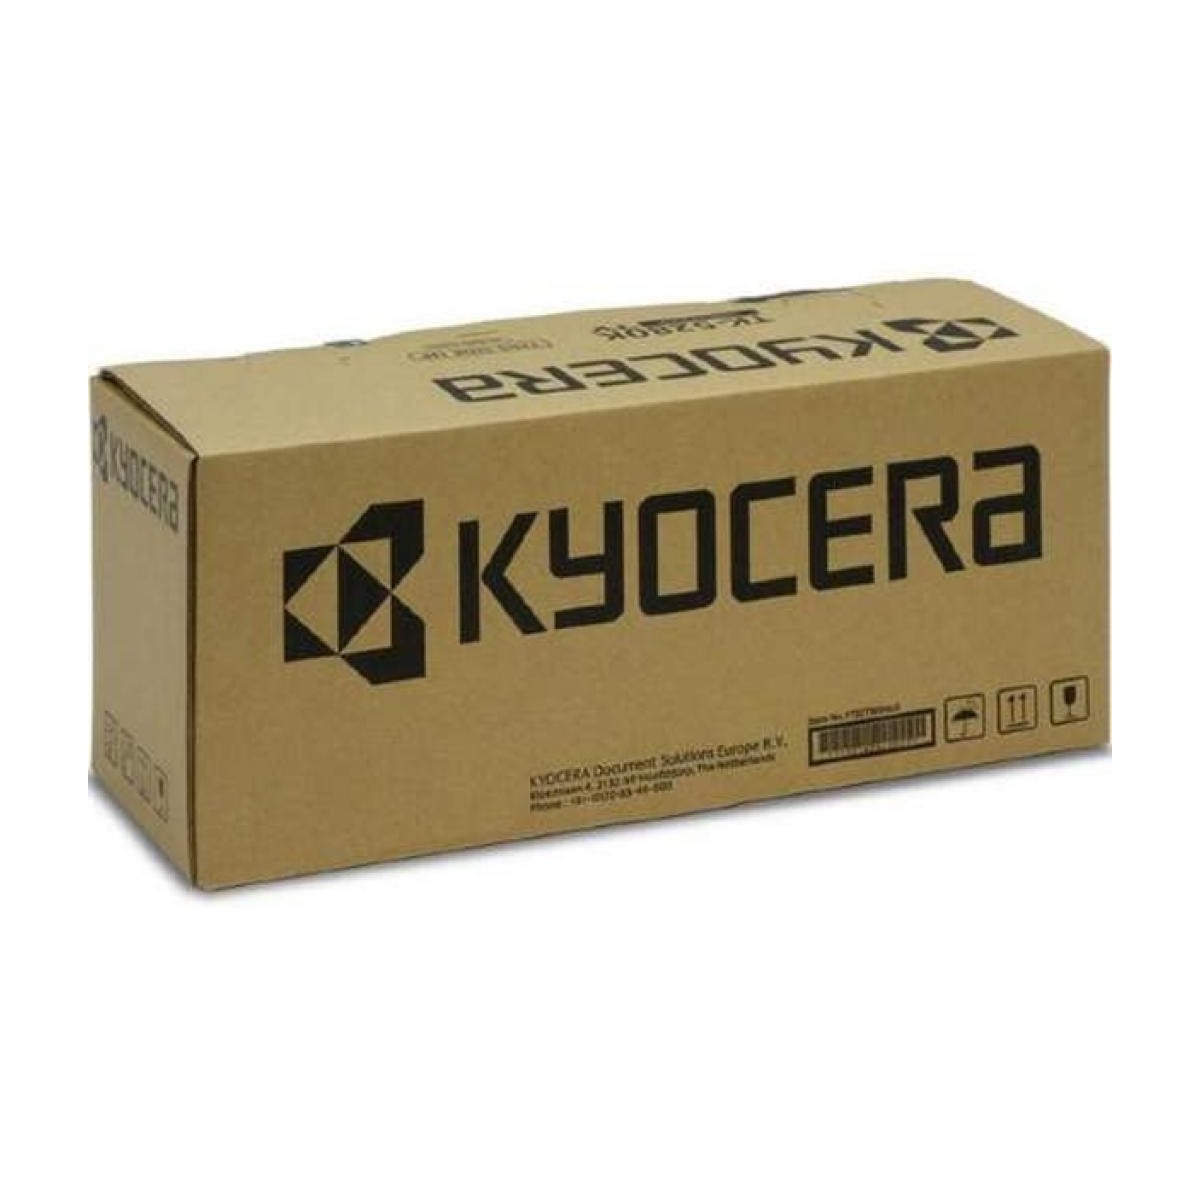 Kyocera TK-5440M Toner Cartridge 2.4K pages - Toner Cartridge